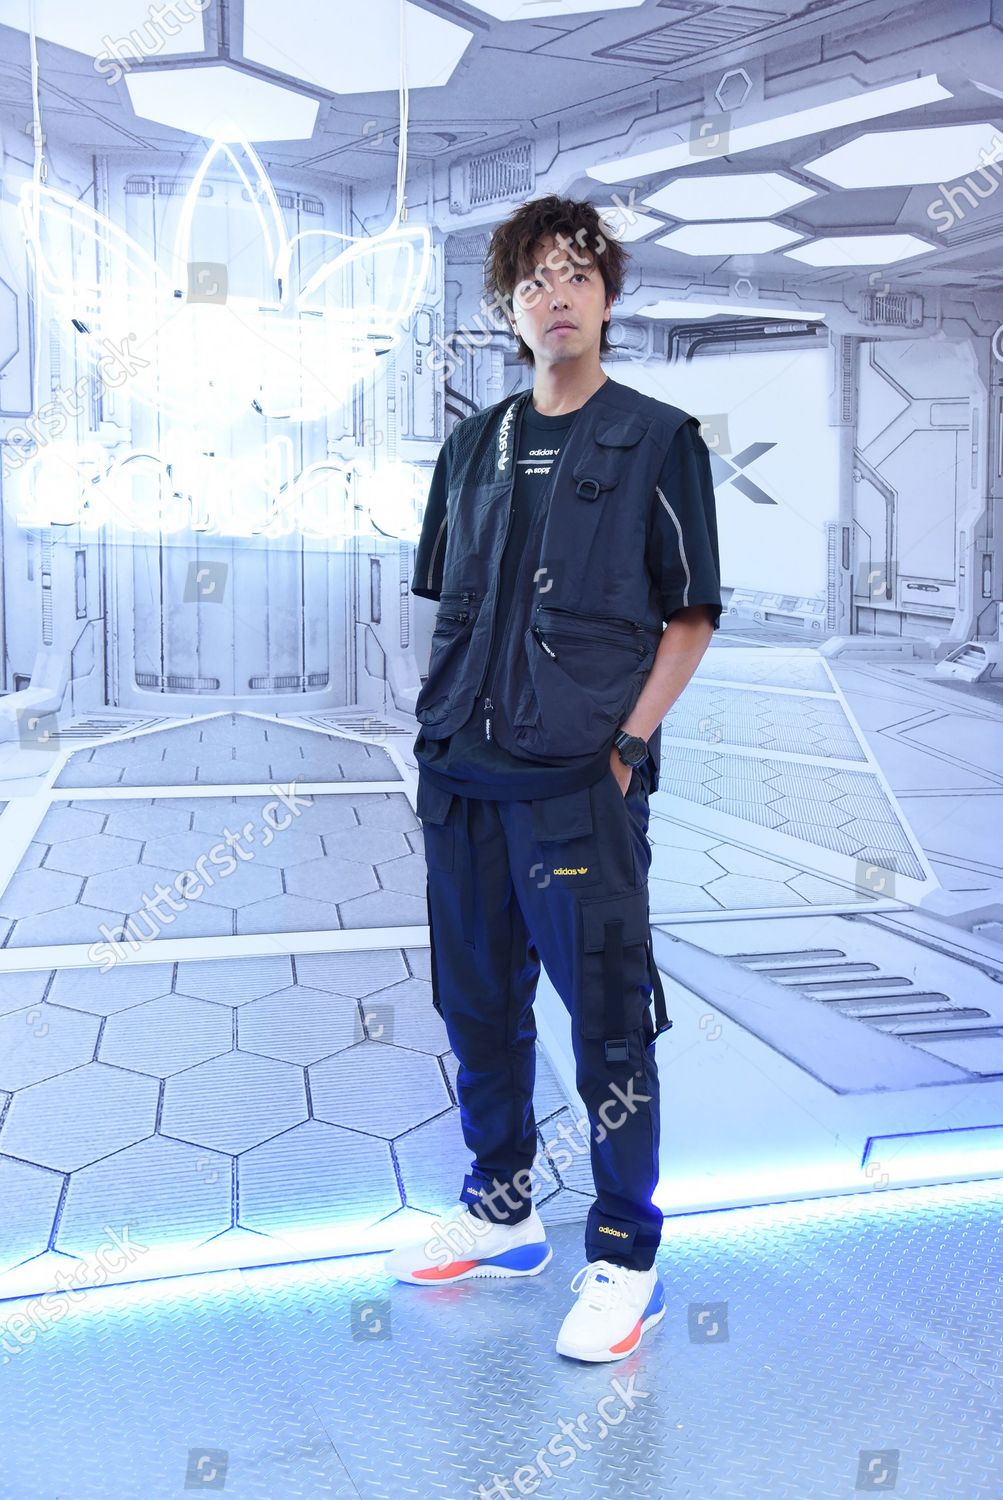 Alien Huang Attends Adidas Brand - Foto de de contenido editorial: de stock | Shutterstock